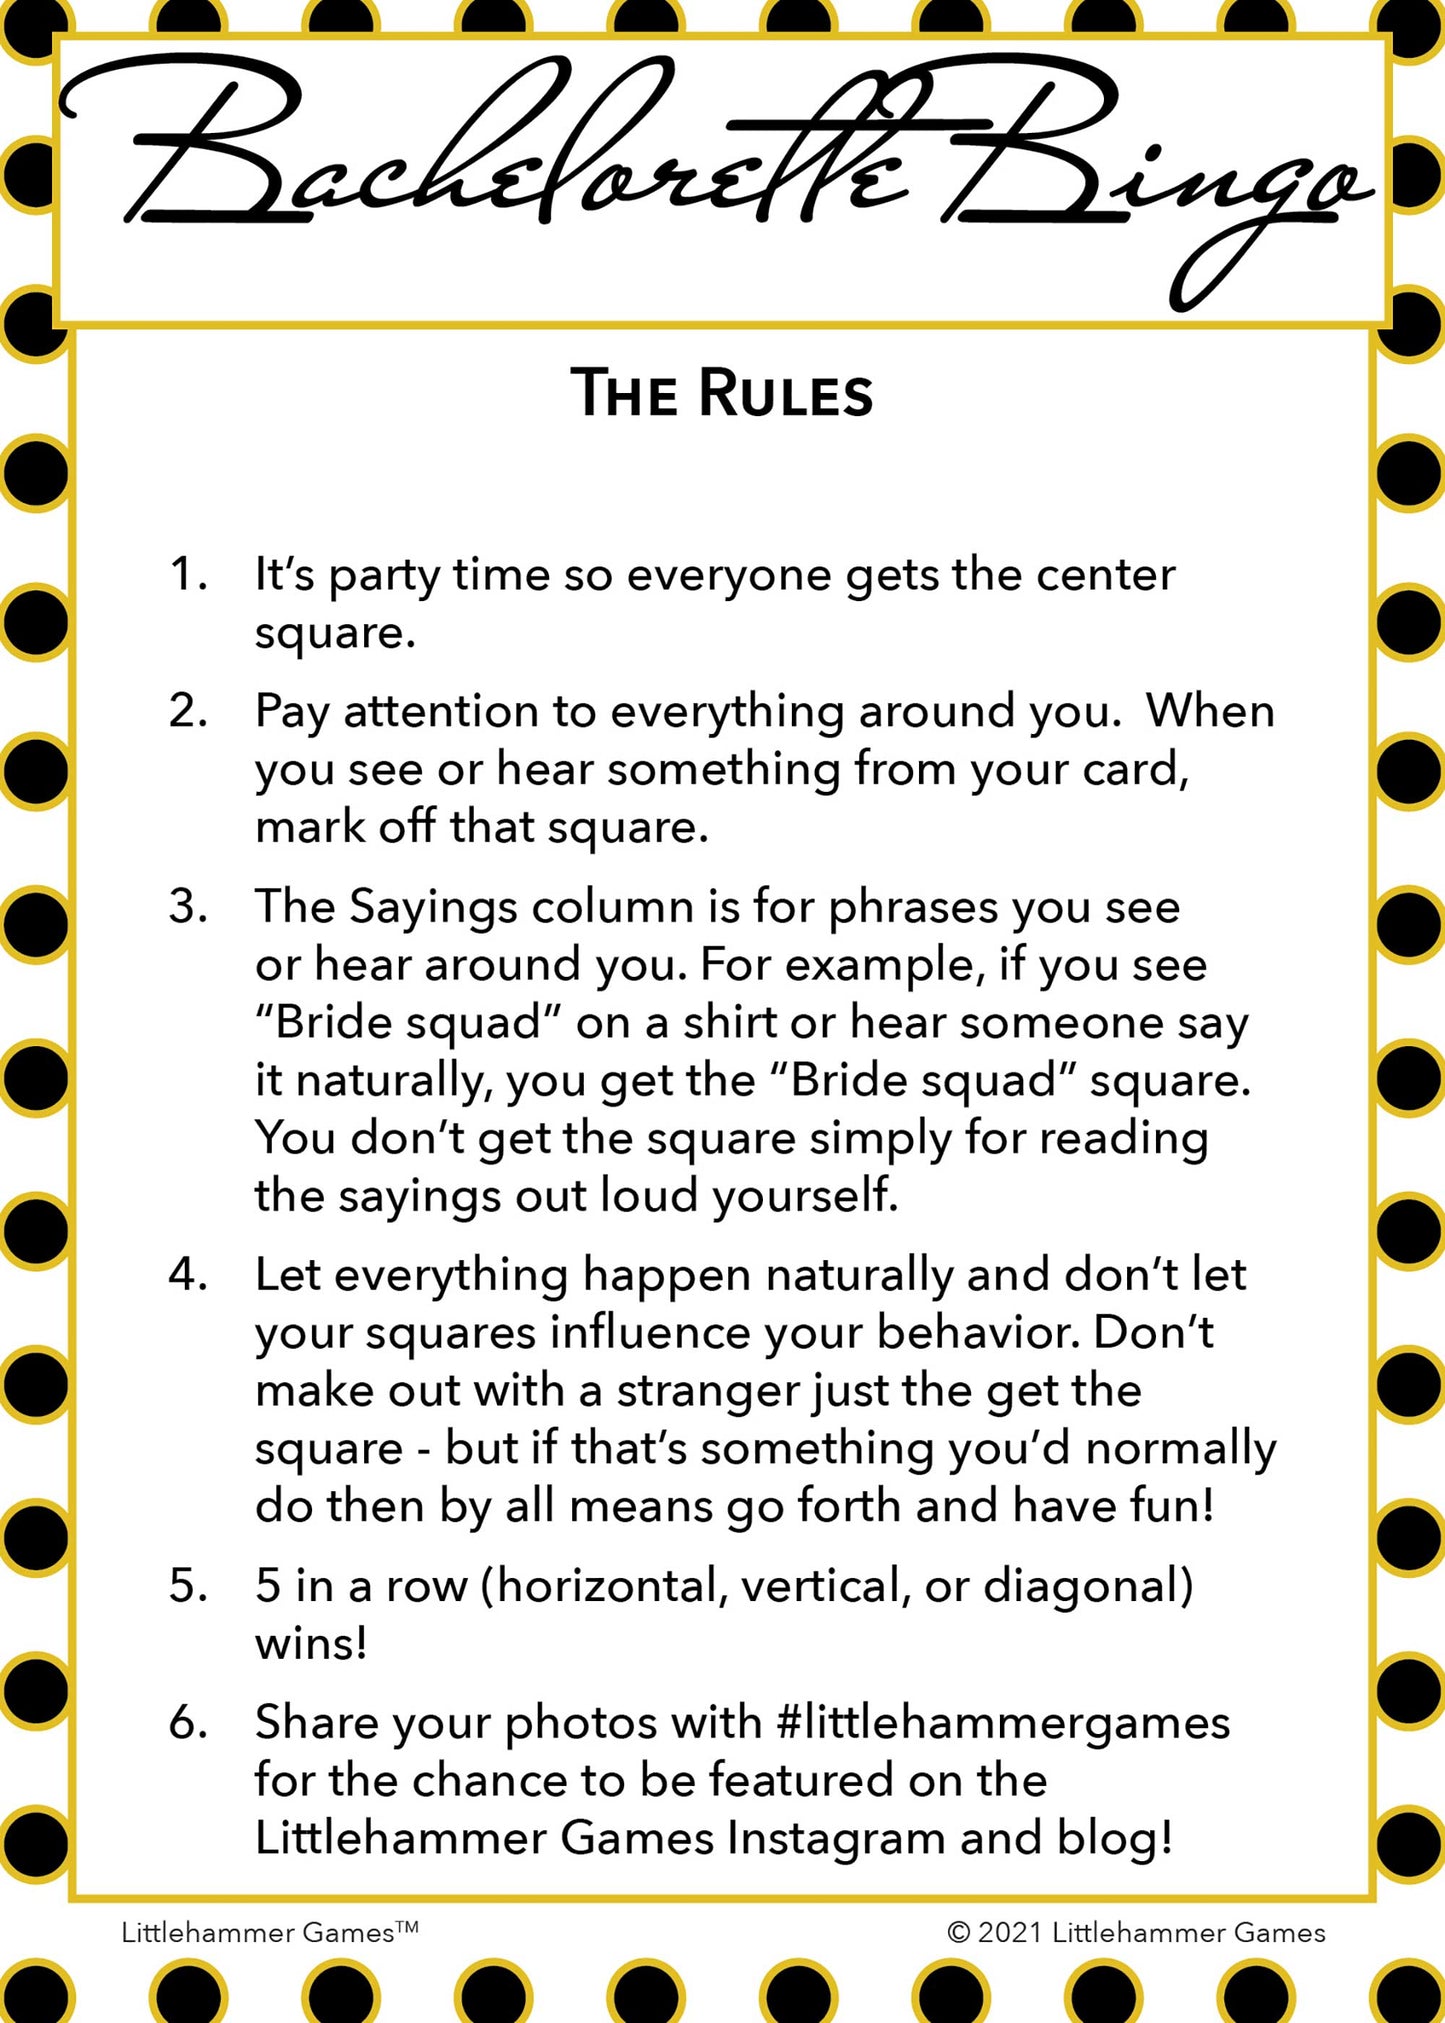 Bachelorette Bingo rules card with a black and gold polka dot background